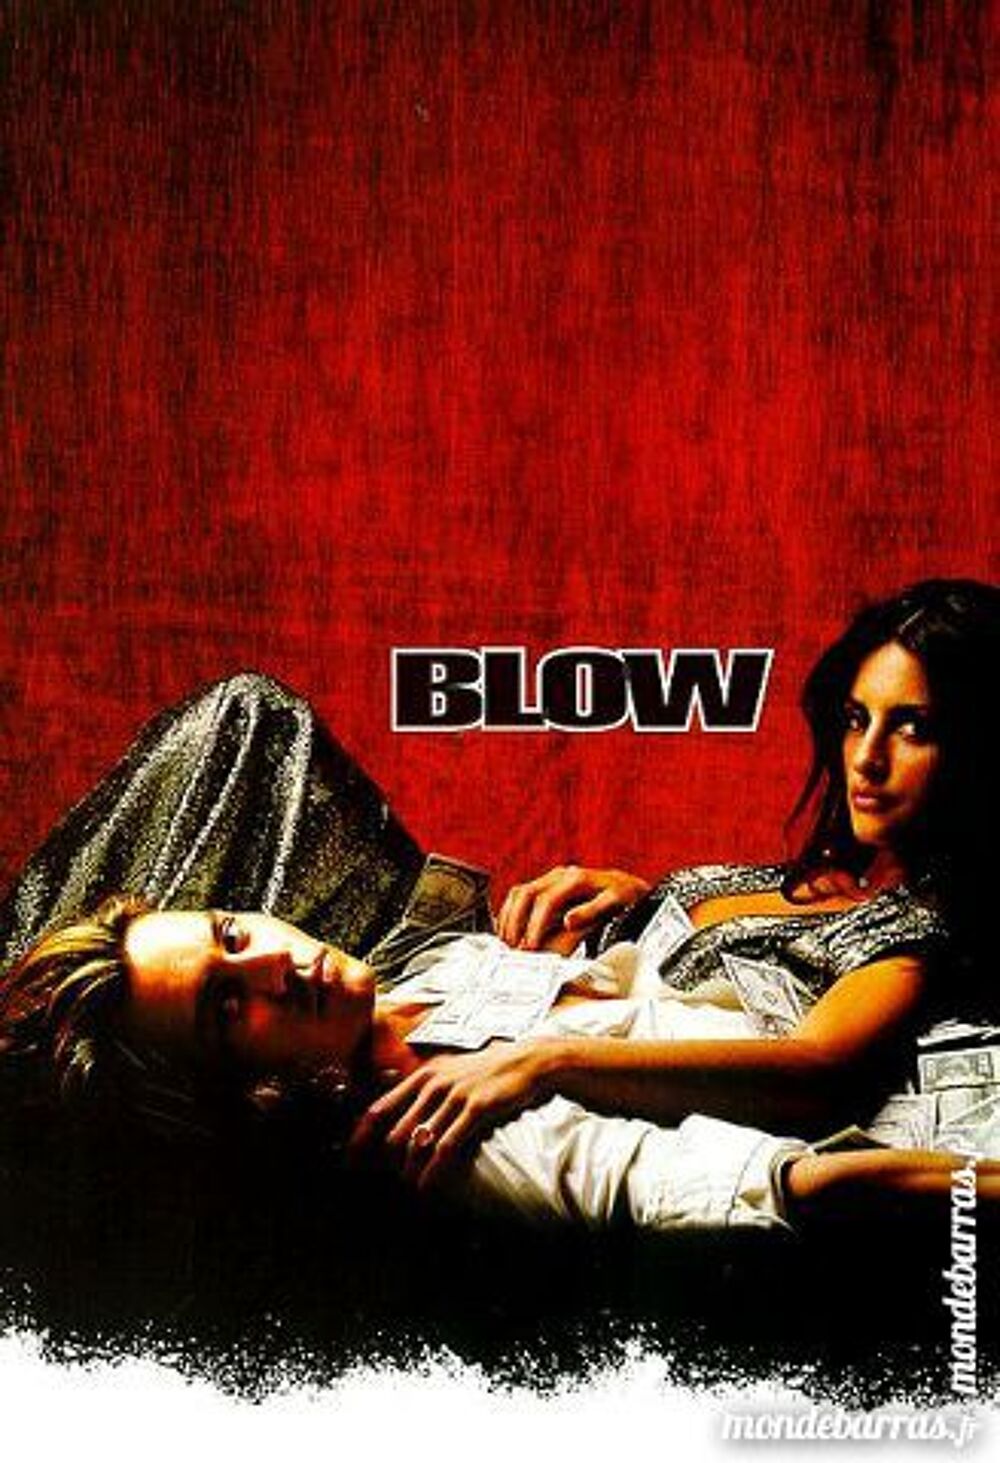 K7 vhs: Blow (239) DVD et blu-ray